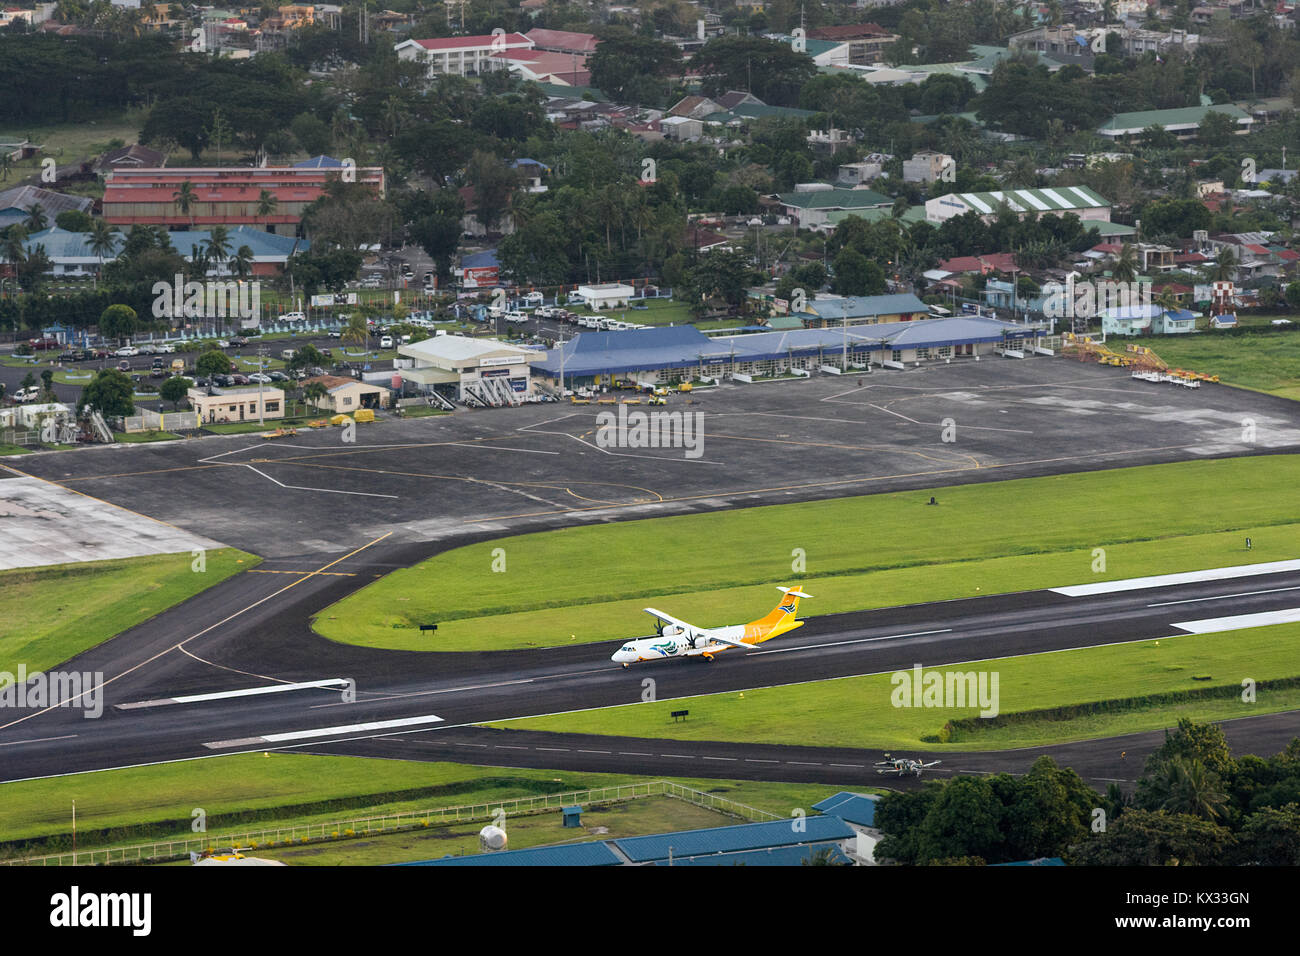 Cebu Pacific Air passenger airplane RP-C7255 ATR 72-500 taking off from Legazpi Airport, Philippines. Stock Photo